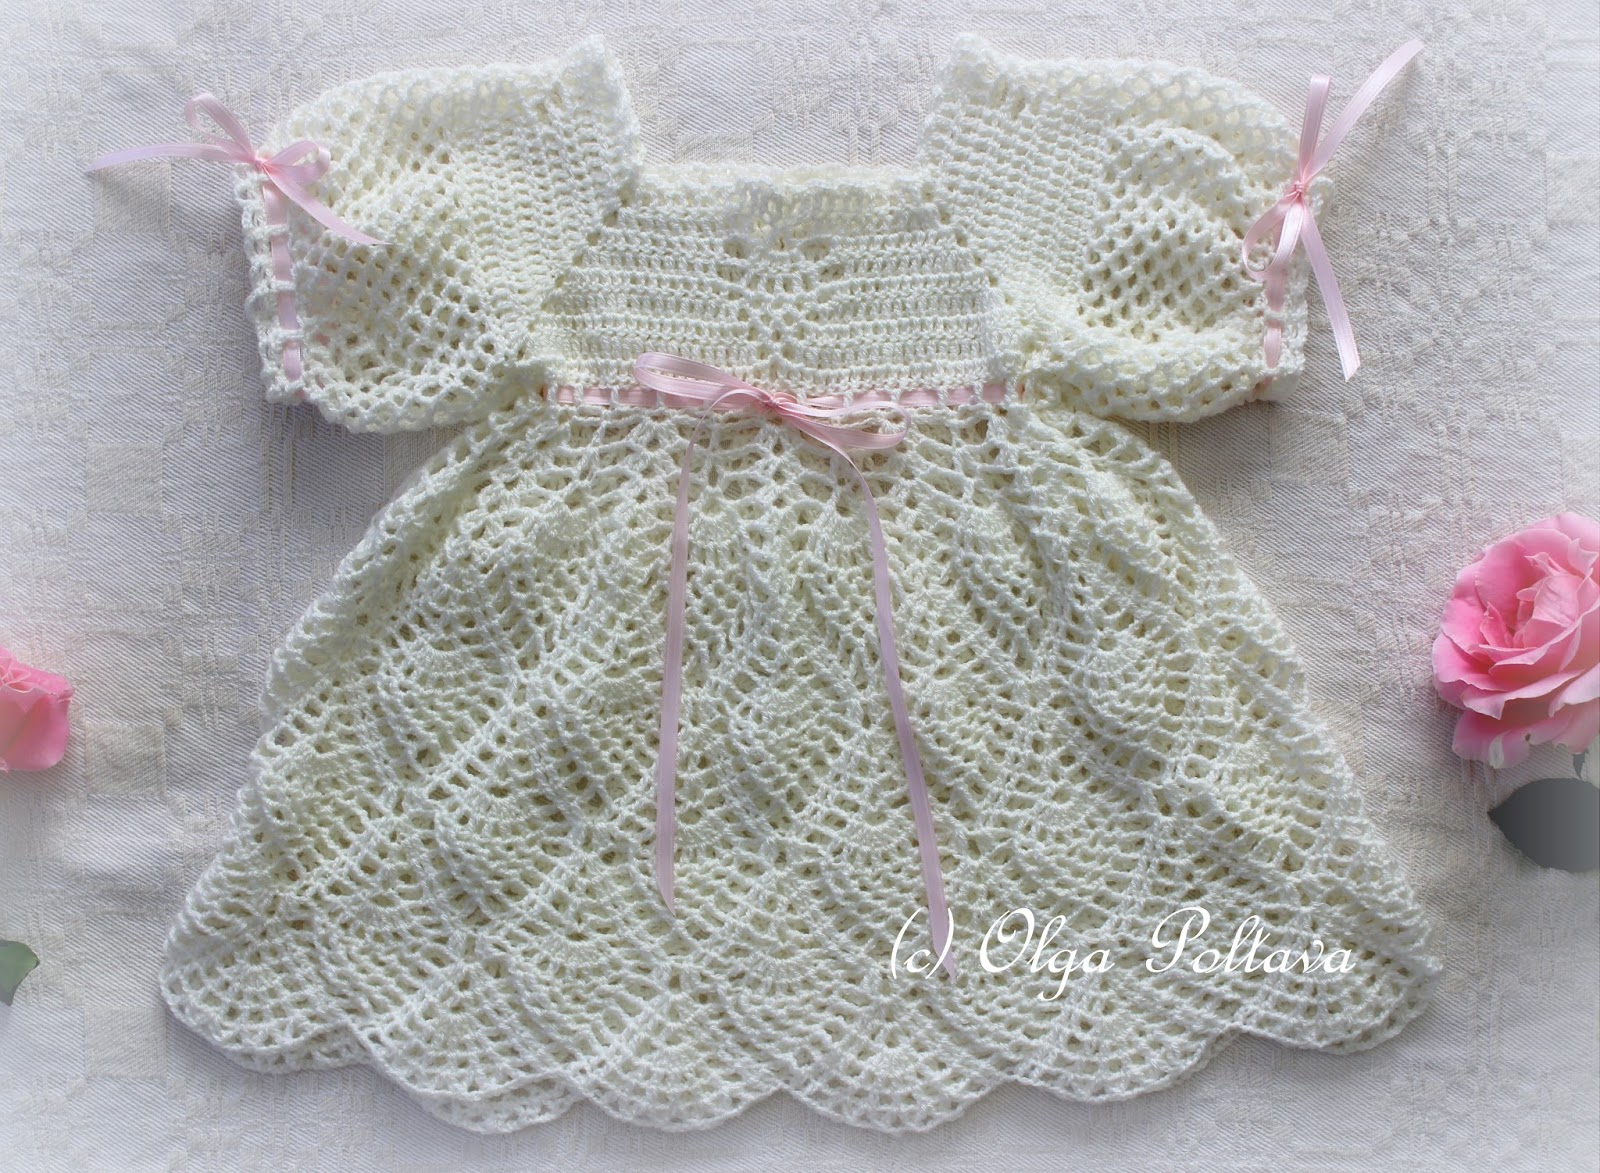 Crochet Baby Dress Free Pattern Lacy Crochet Whipped Cream Dress Free Pattern From Leisure Arts